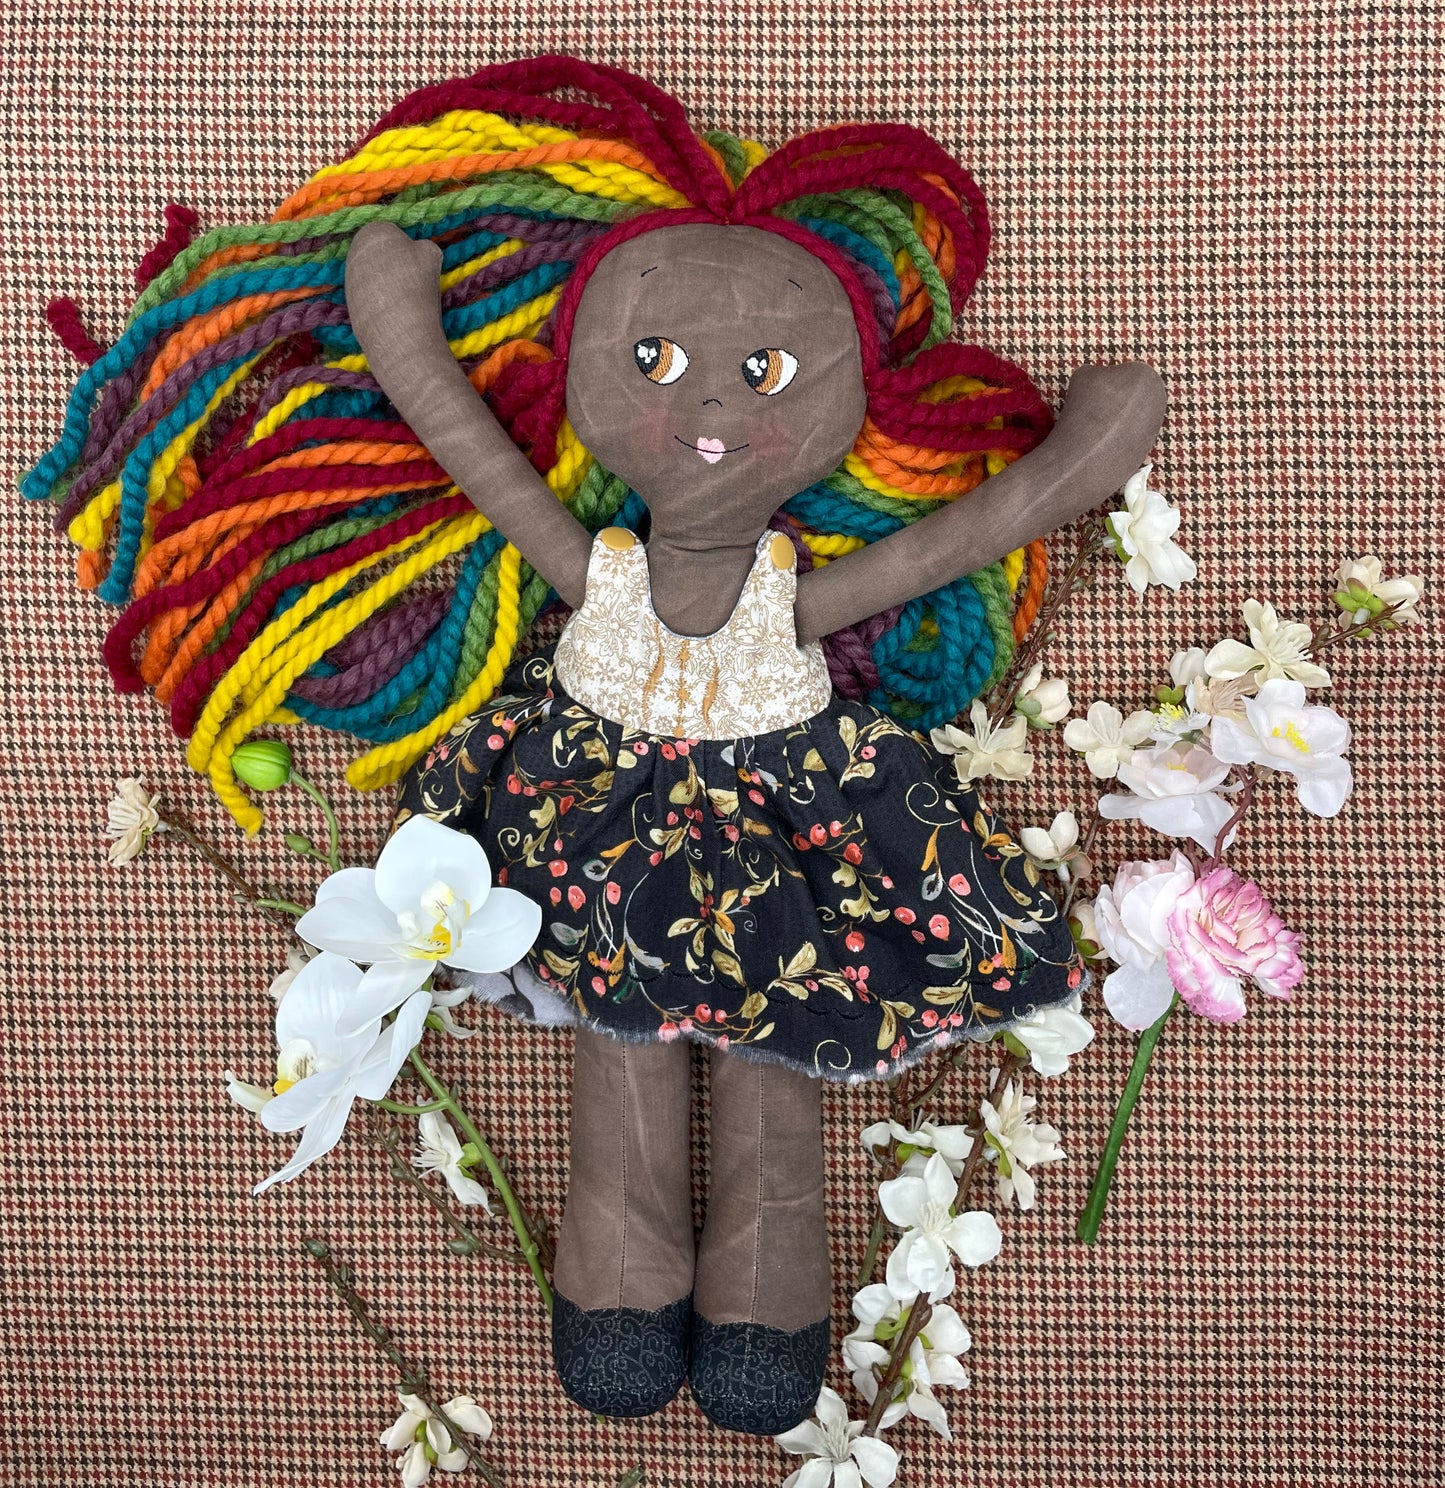 REVERSIBLE DRESS, Handmade Doll, "FLOR", handmade gift, pride doll, rainbow doll, black doll, diverse doll, heirloom doll, Brown Muslin